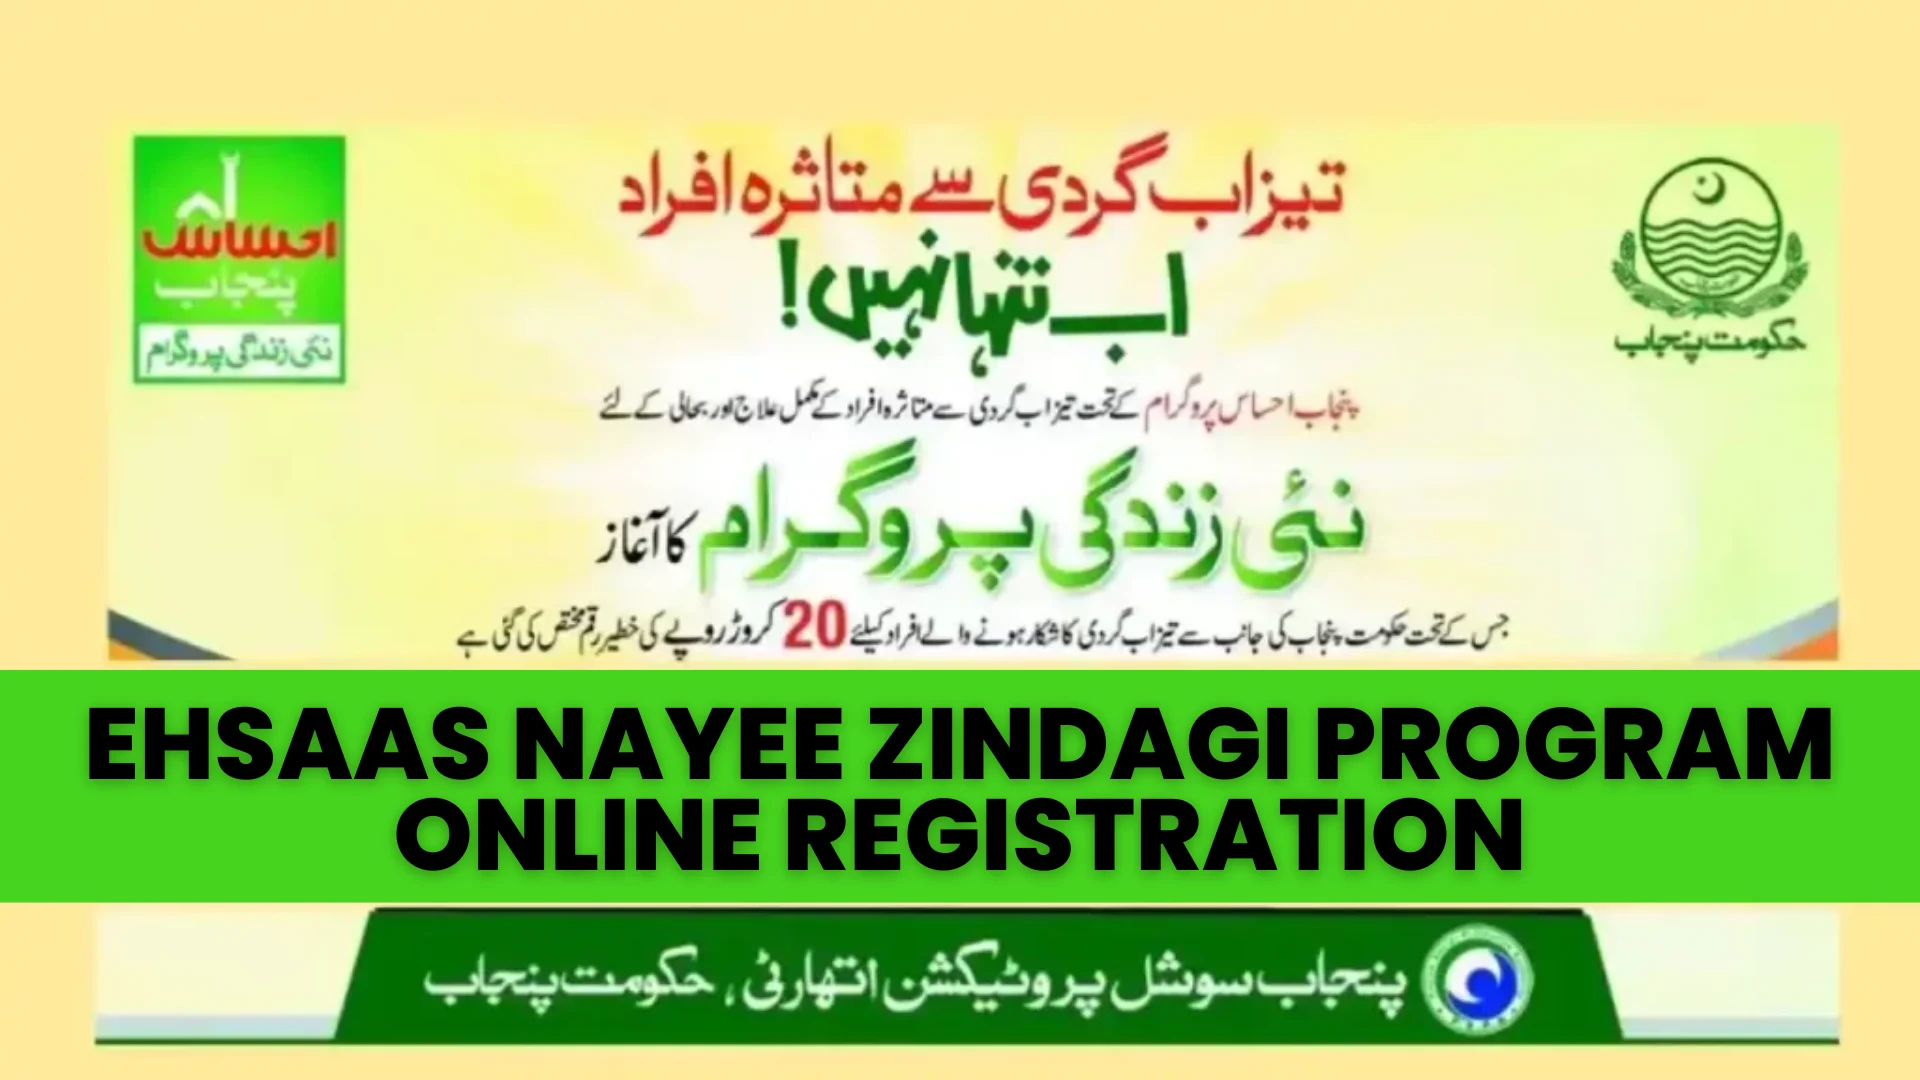 Ehsaas Nayee Zindagi Program Online Registration